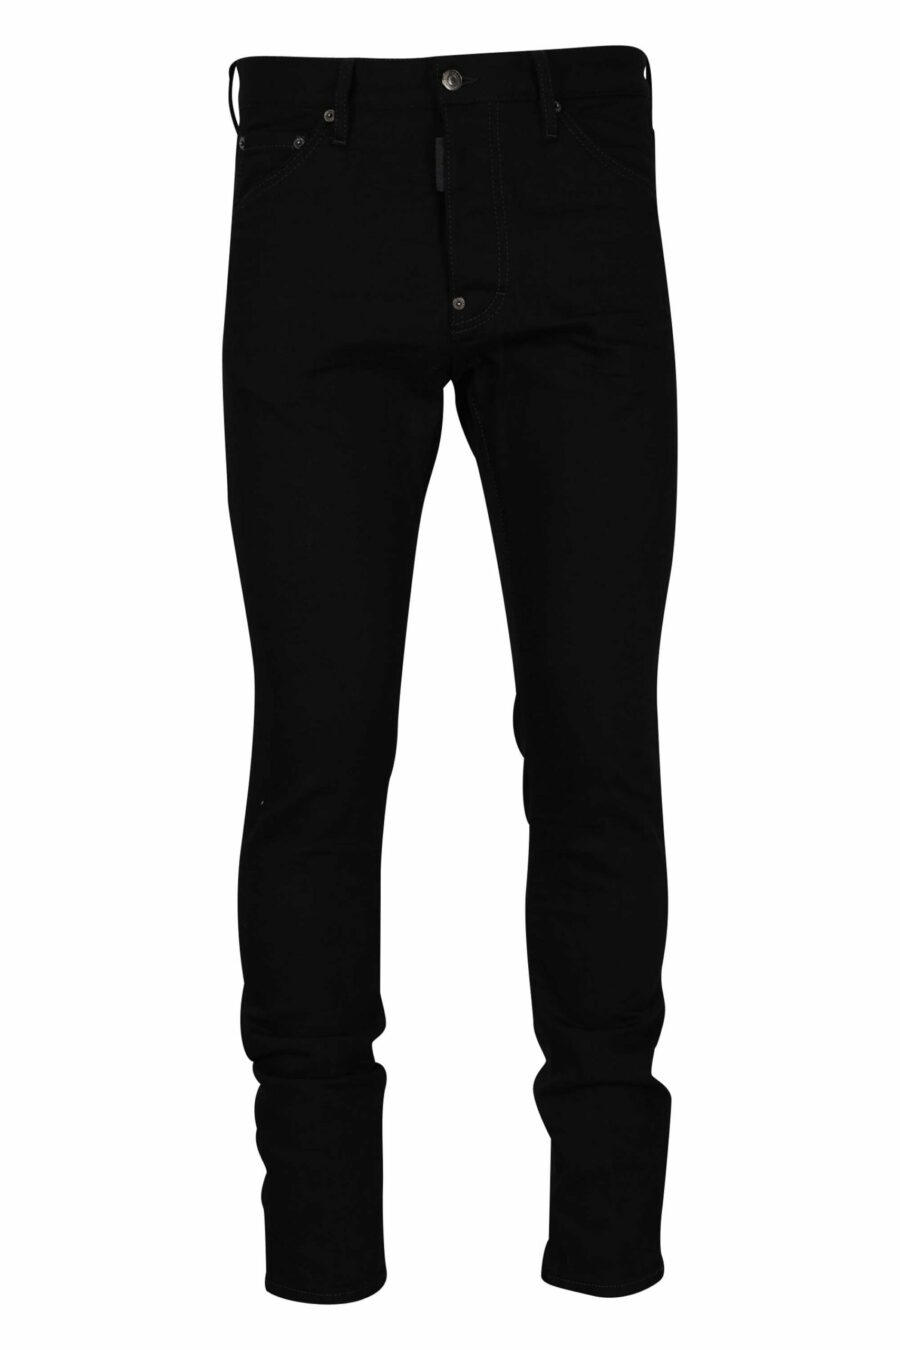 Pantalón negro "cool guy jean" - 8054148284039 scaled